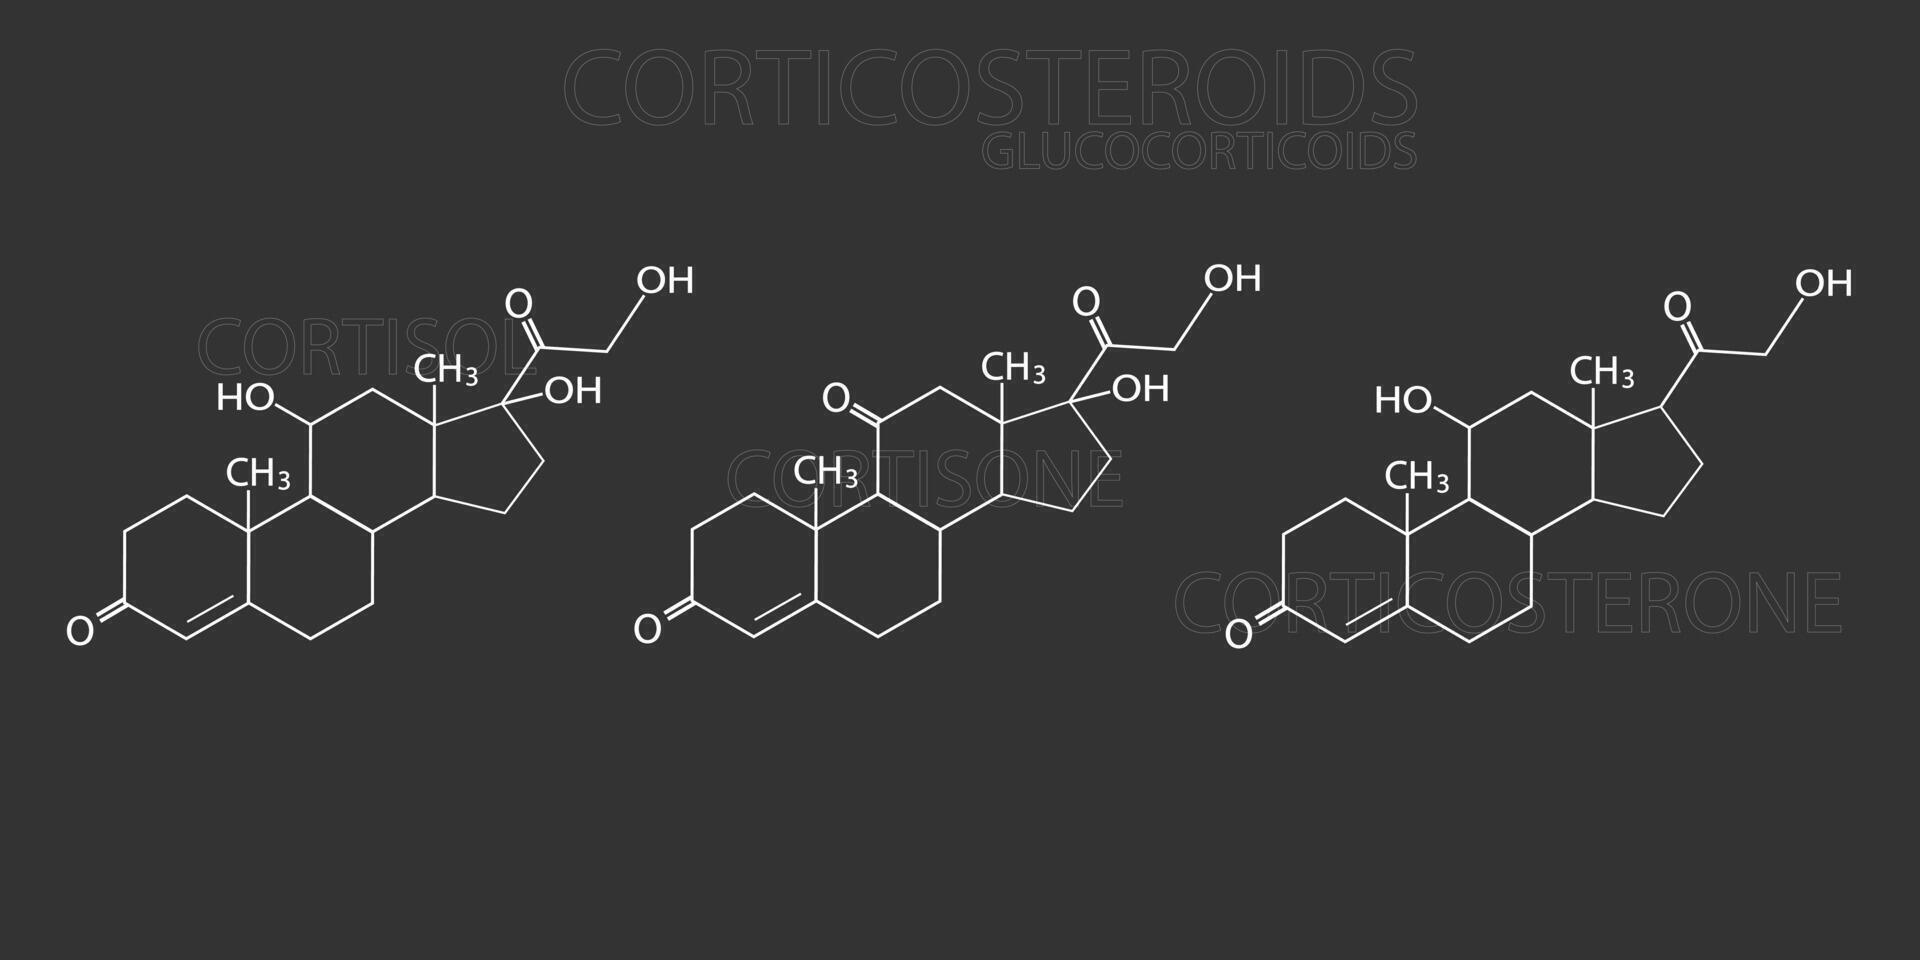 Kortikosteroide Glukokortikoide molekular Skelett- chemisch Formel vektor